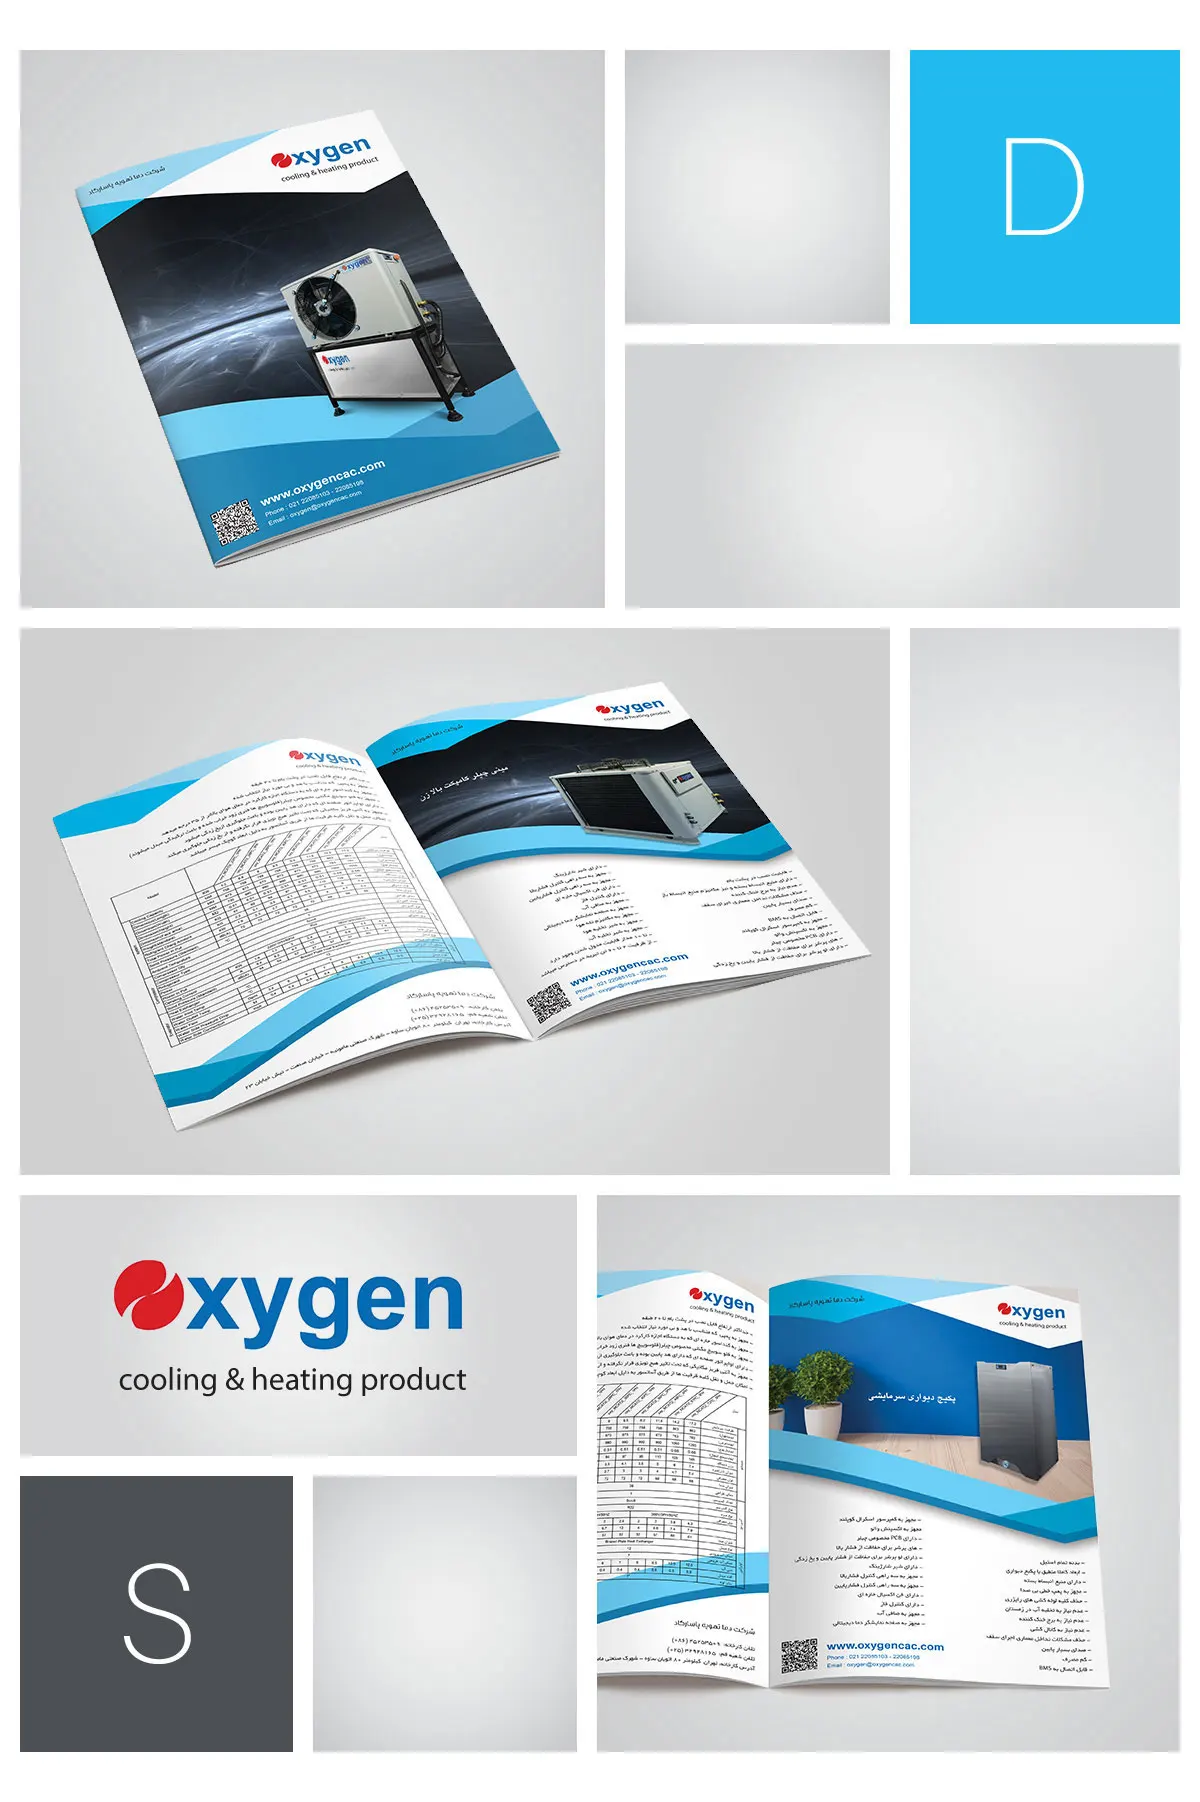 Oxygen Company catalog design | Hossein Donyadideh